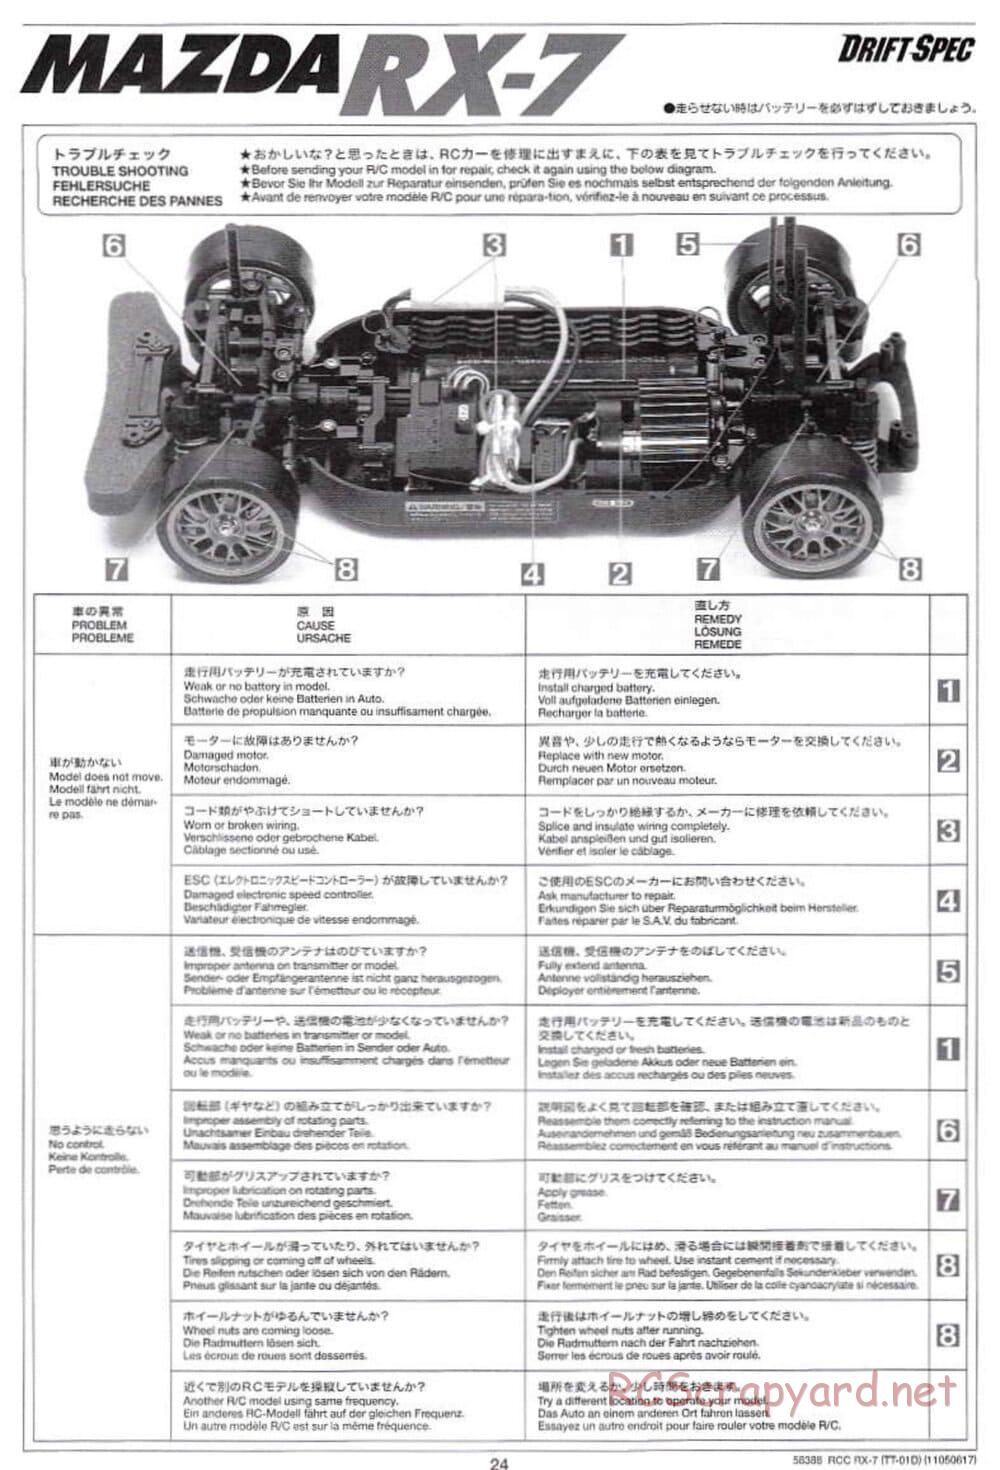 Tamiya - Mazda RX-7 - Drift Spec - TT-01D Chassis - Manual - Page 24